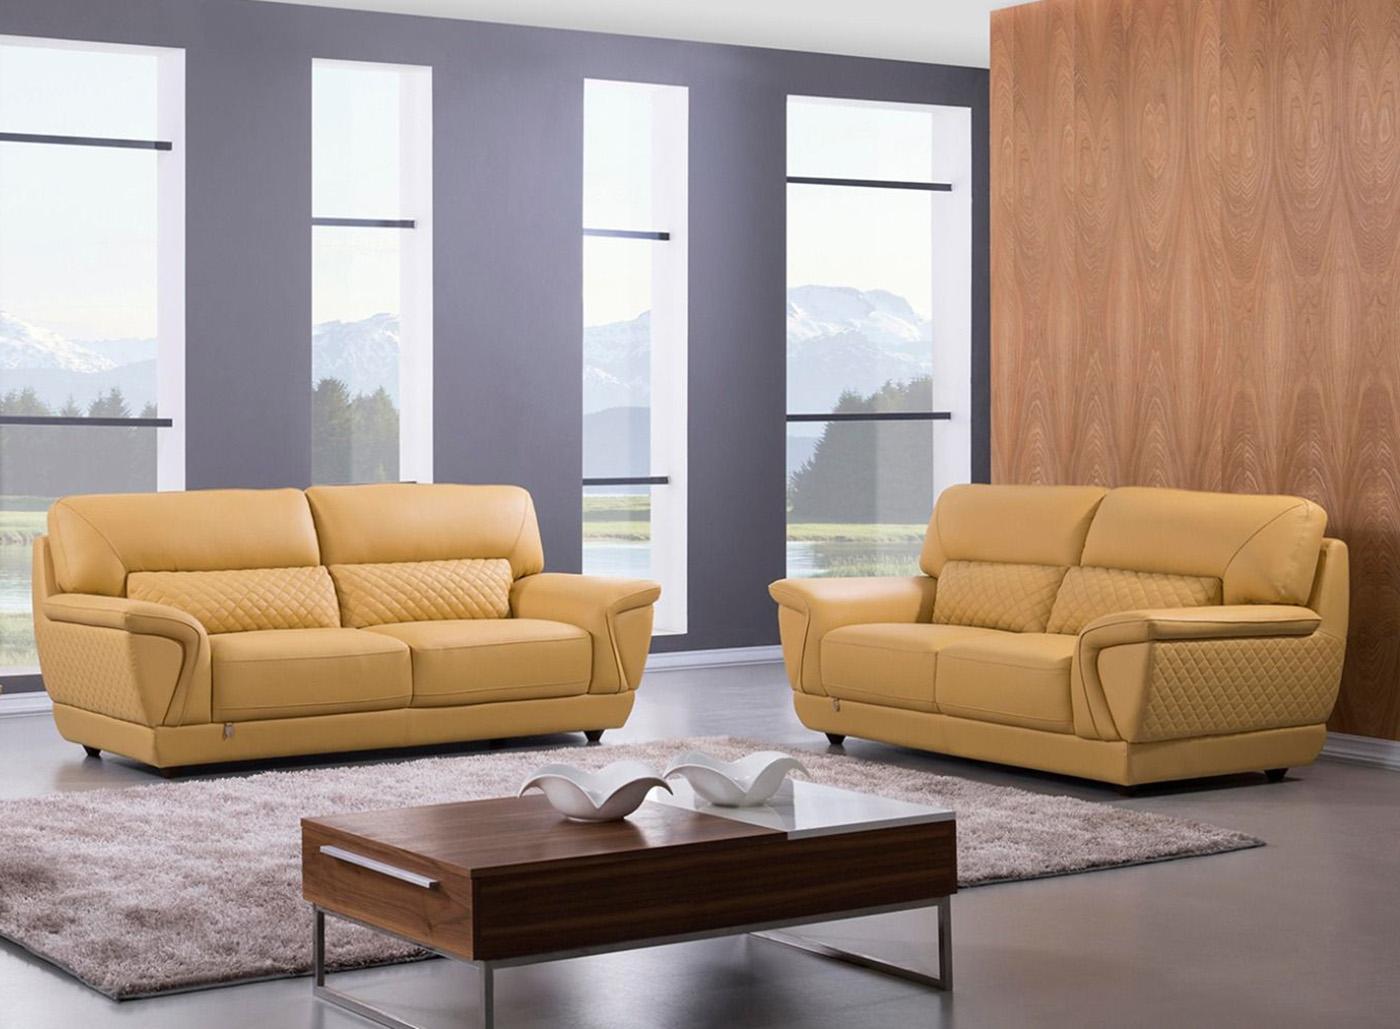 Ek099 Yellowcolor With Italian Leather Sofa